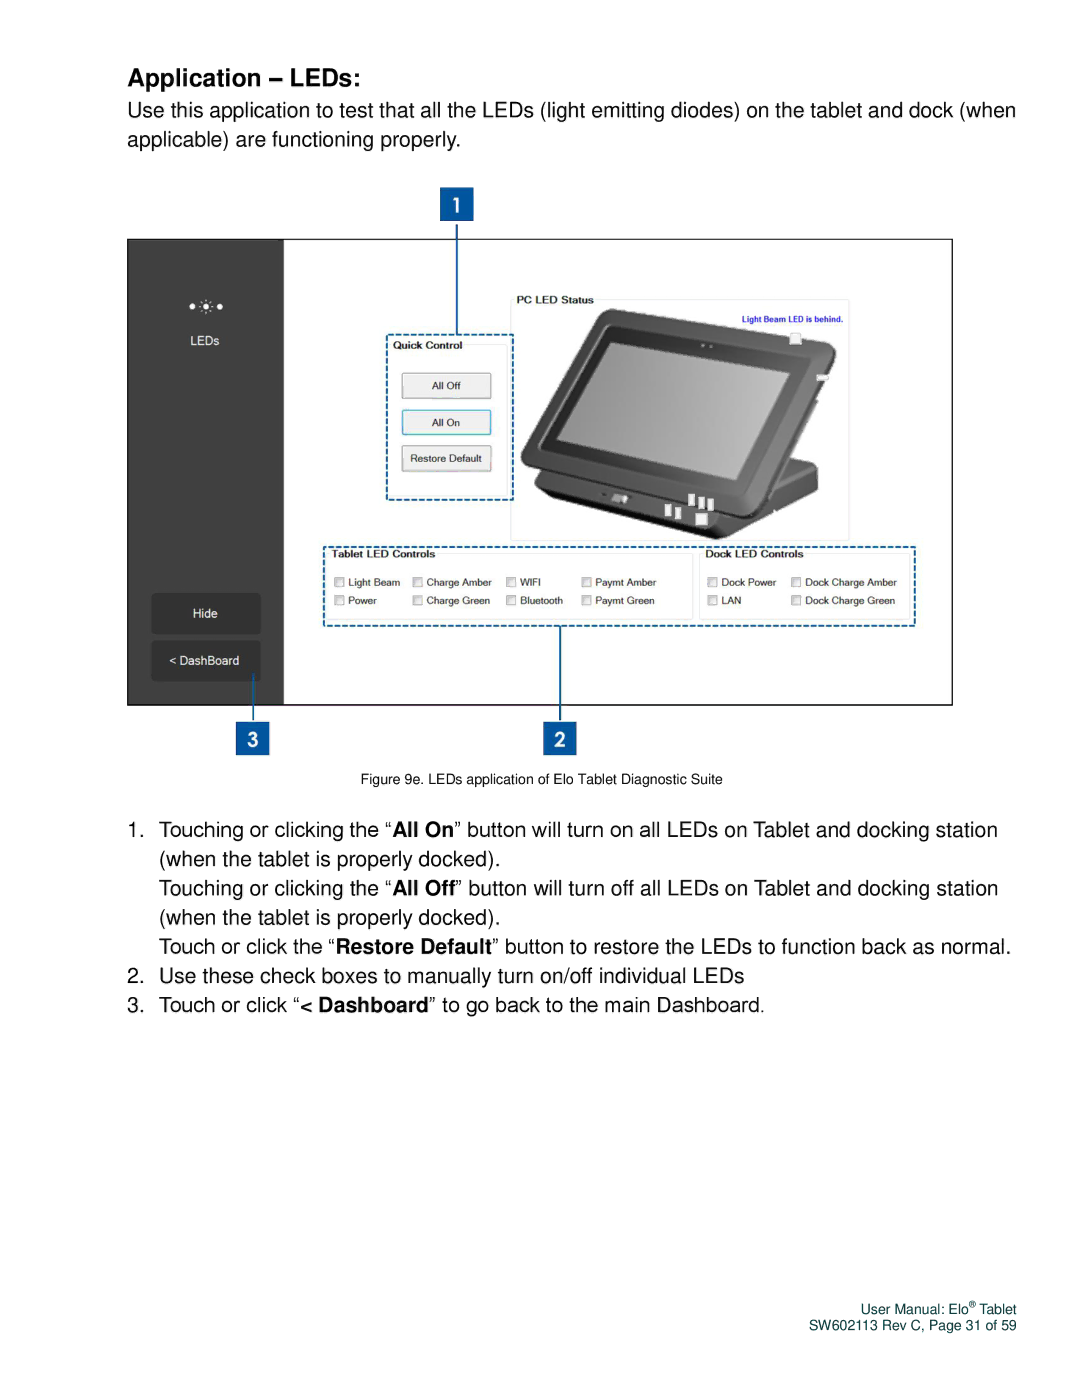 Elo TouchSystems SW602113 manual Application LEDs, LEDs application of Elo Tablet Diagnostic Suite 